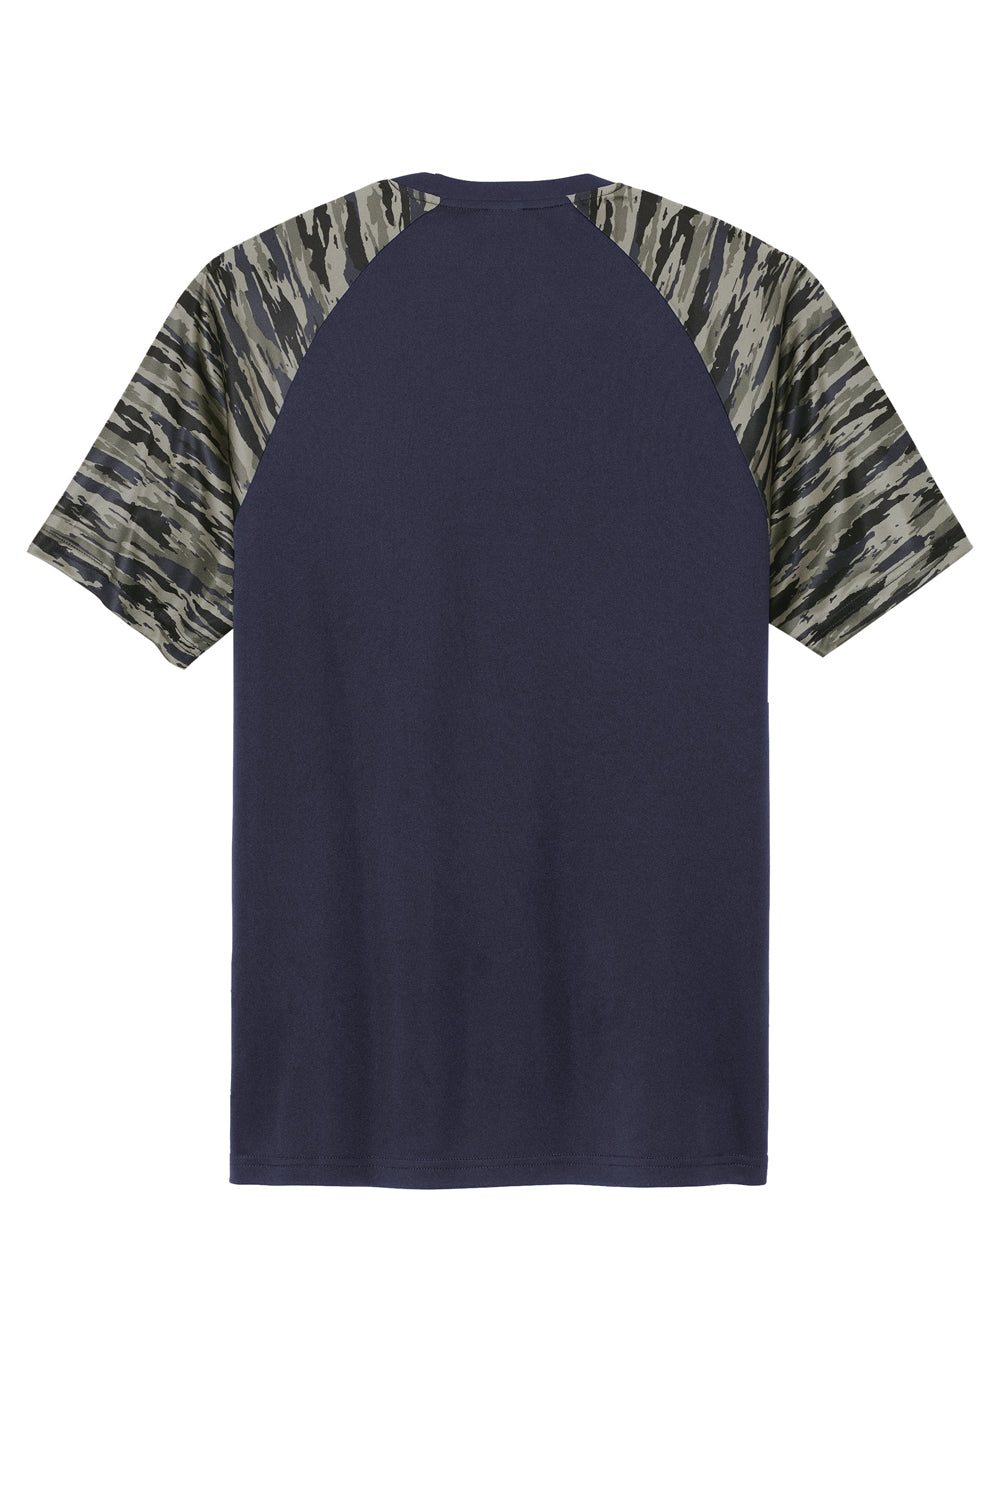 Sport-Tek Mens Drift Camo Colorblock Short Sleeve Crewneck T-Shirt True Navy Blue Flat Back